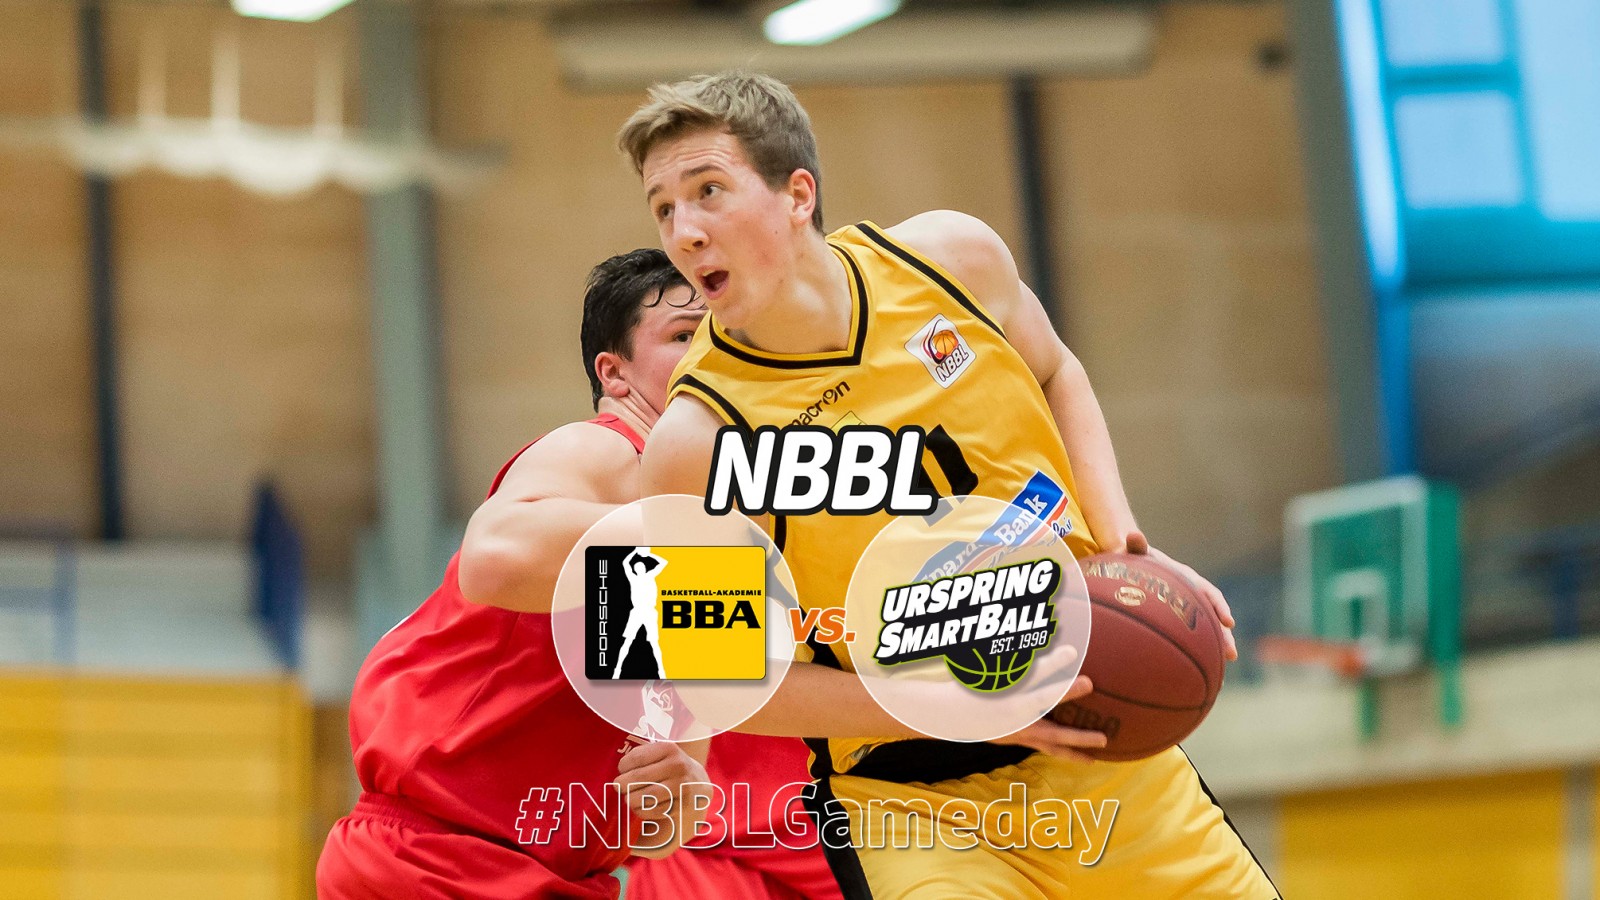 NBBL-Ludwigsburg-vs-Urspring